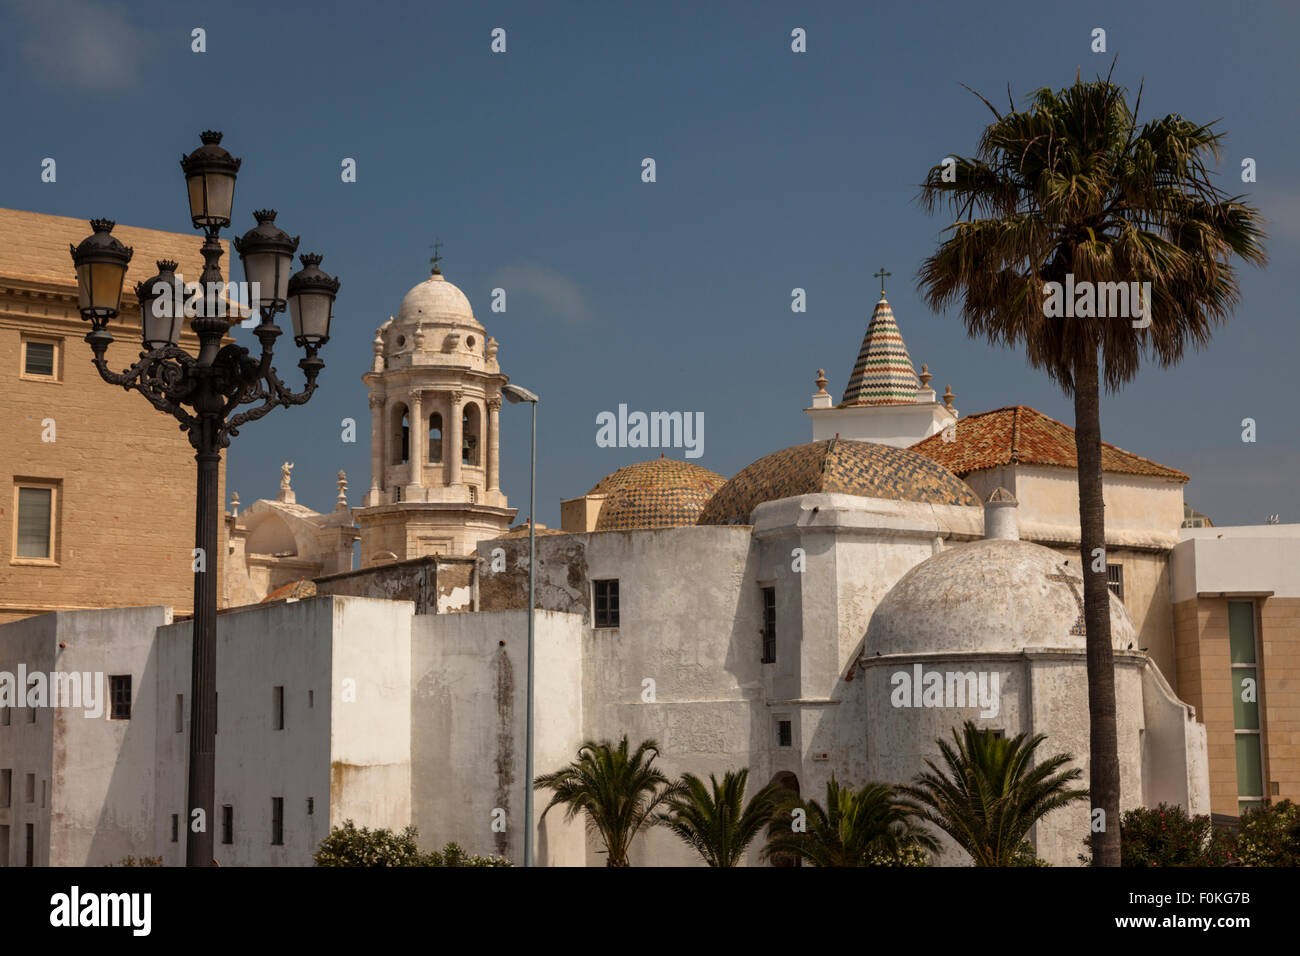 Spain, Cadiz, candelabrum, architecture and palm Stock Photo